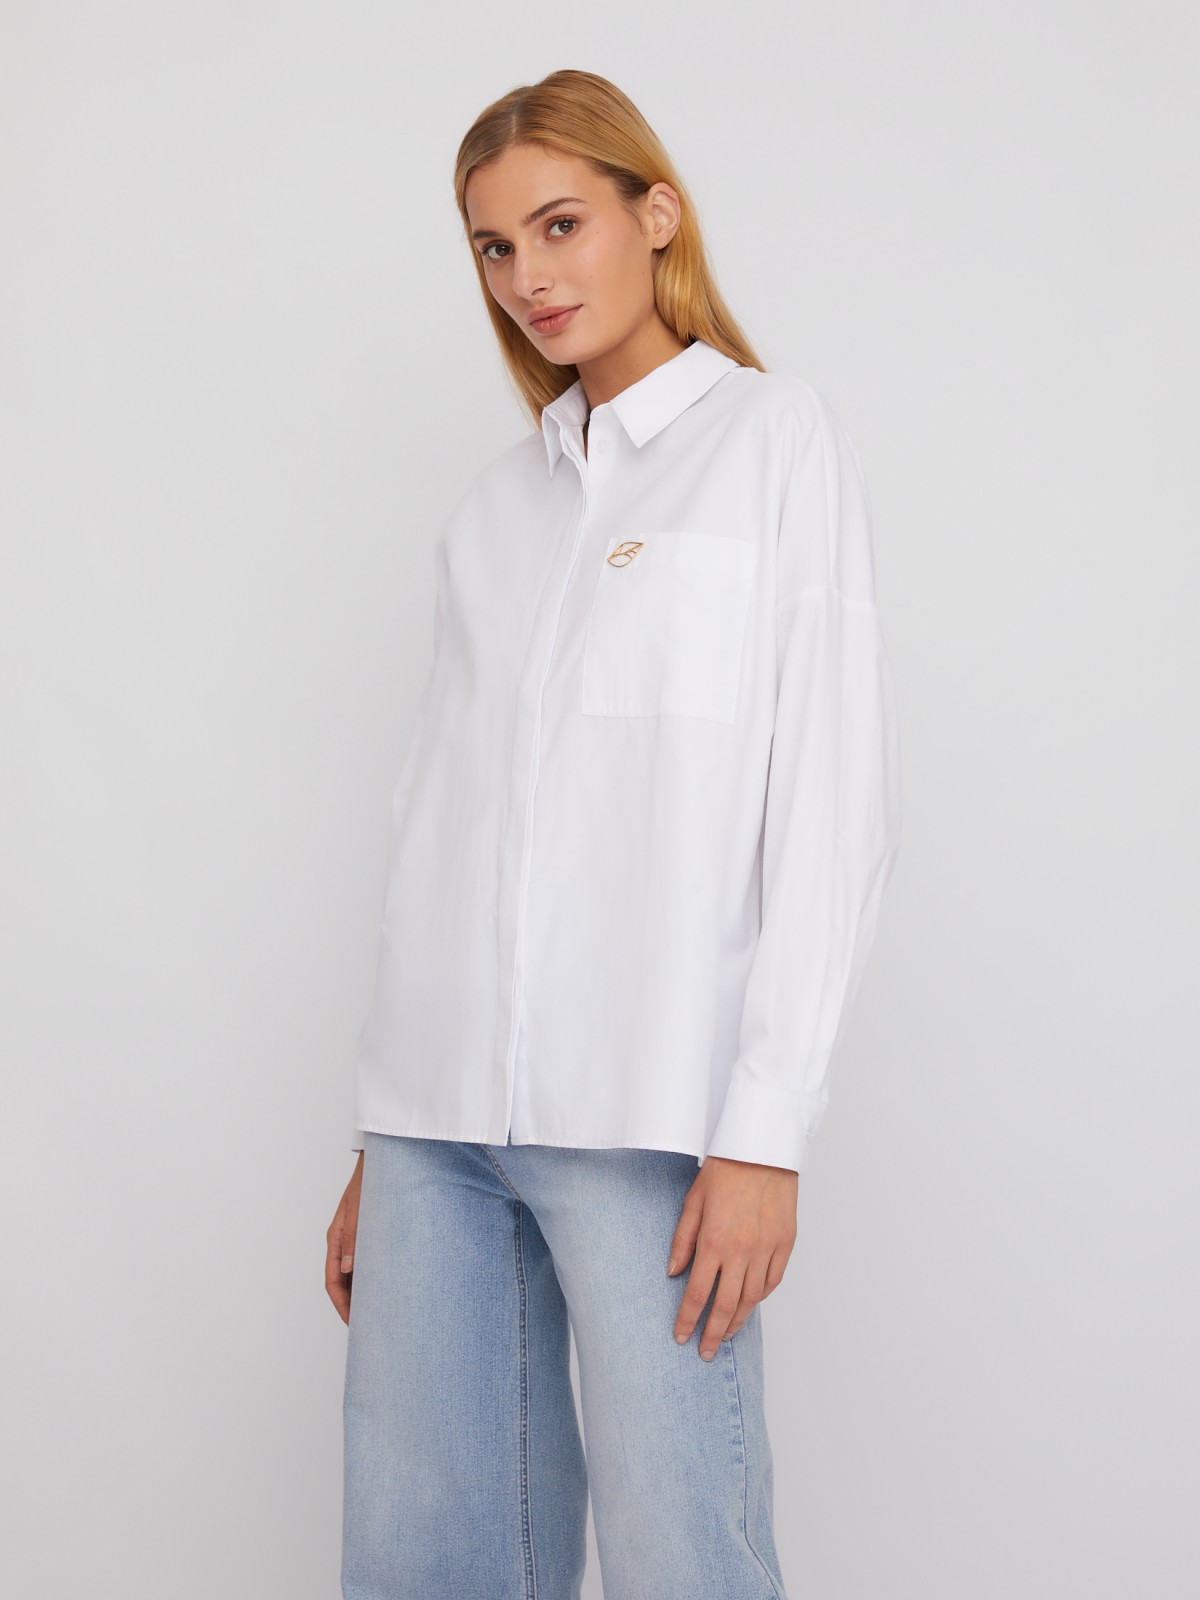 Рубашка оверсайз силуэта с металлическим значком-нашивкой zolla белого цвета